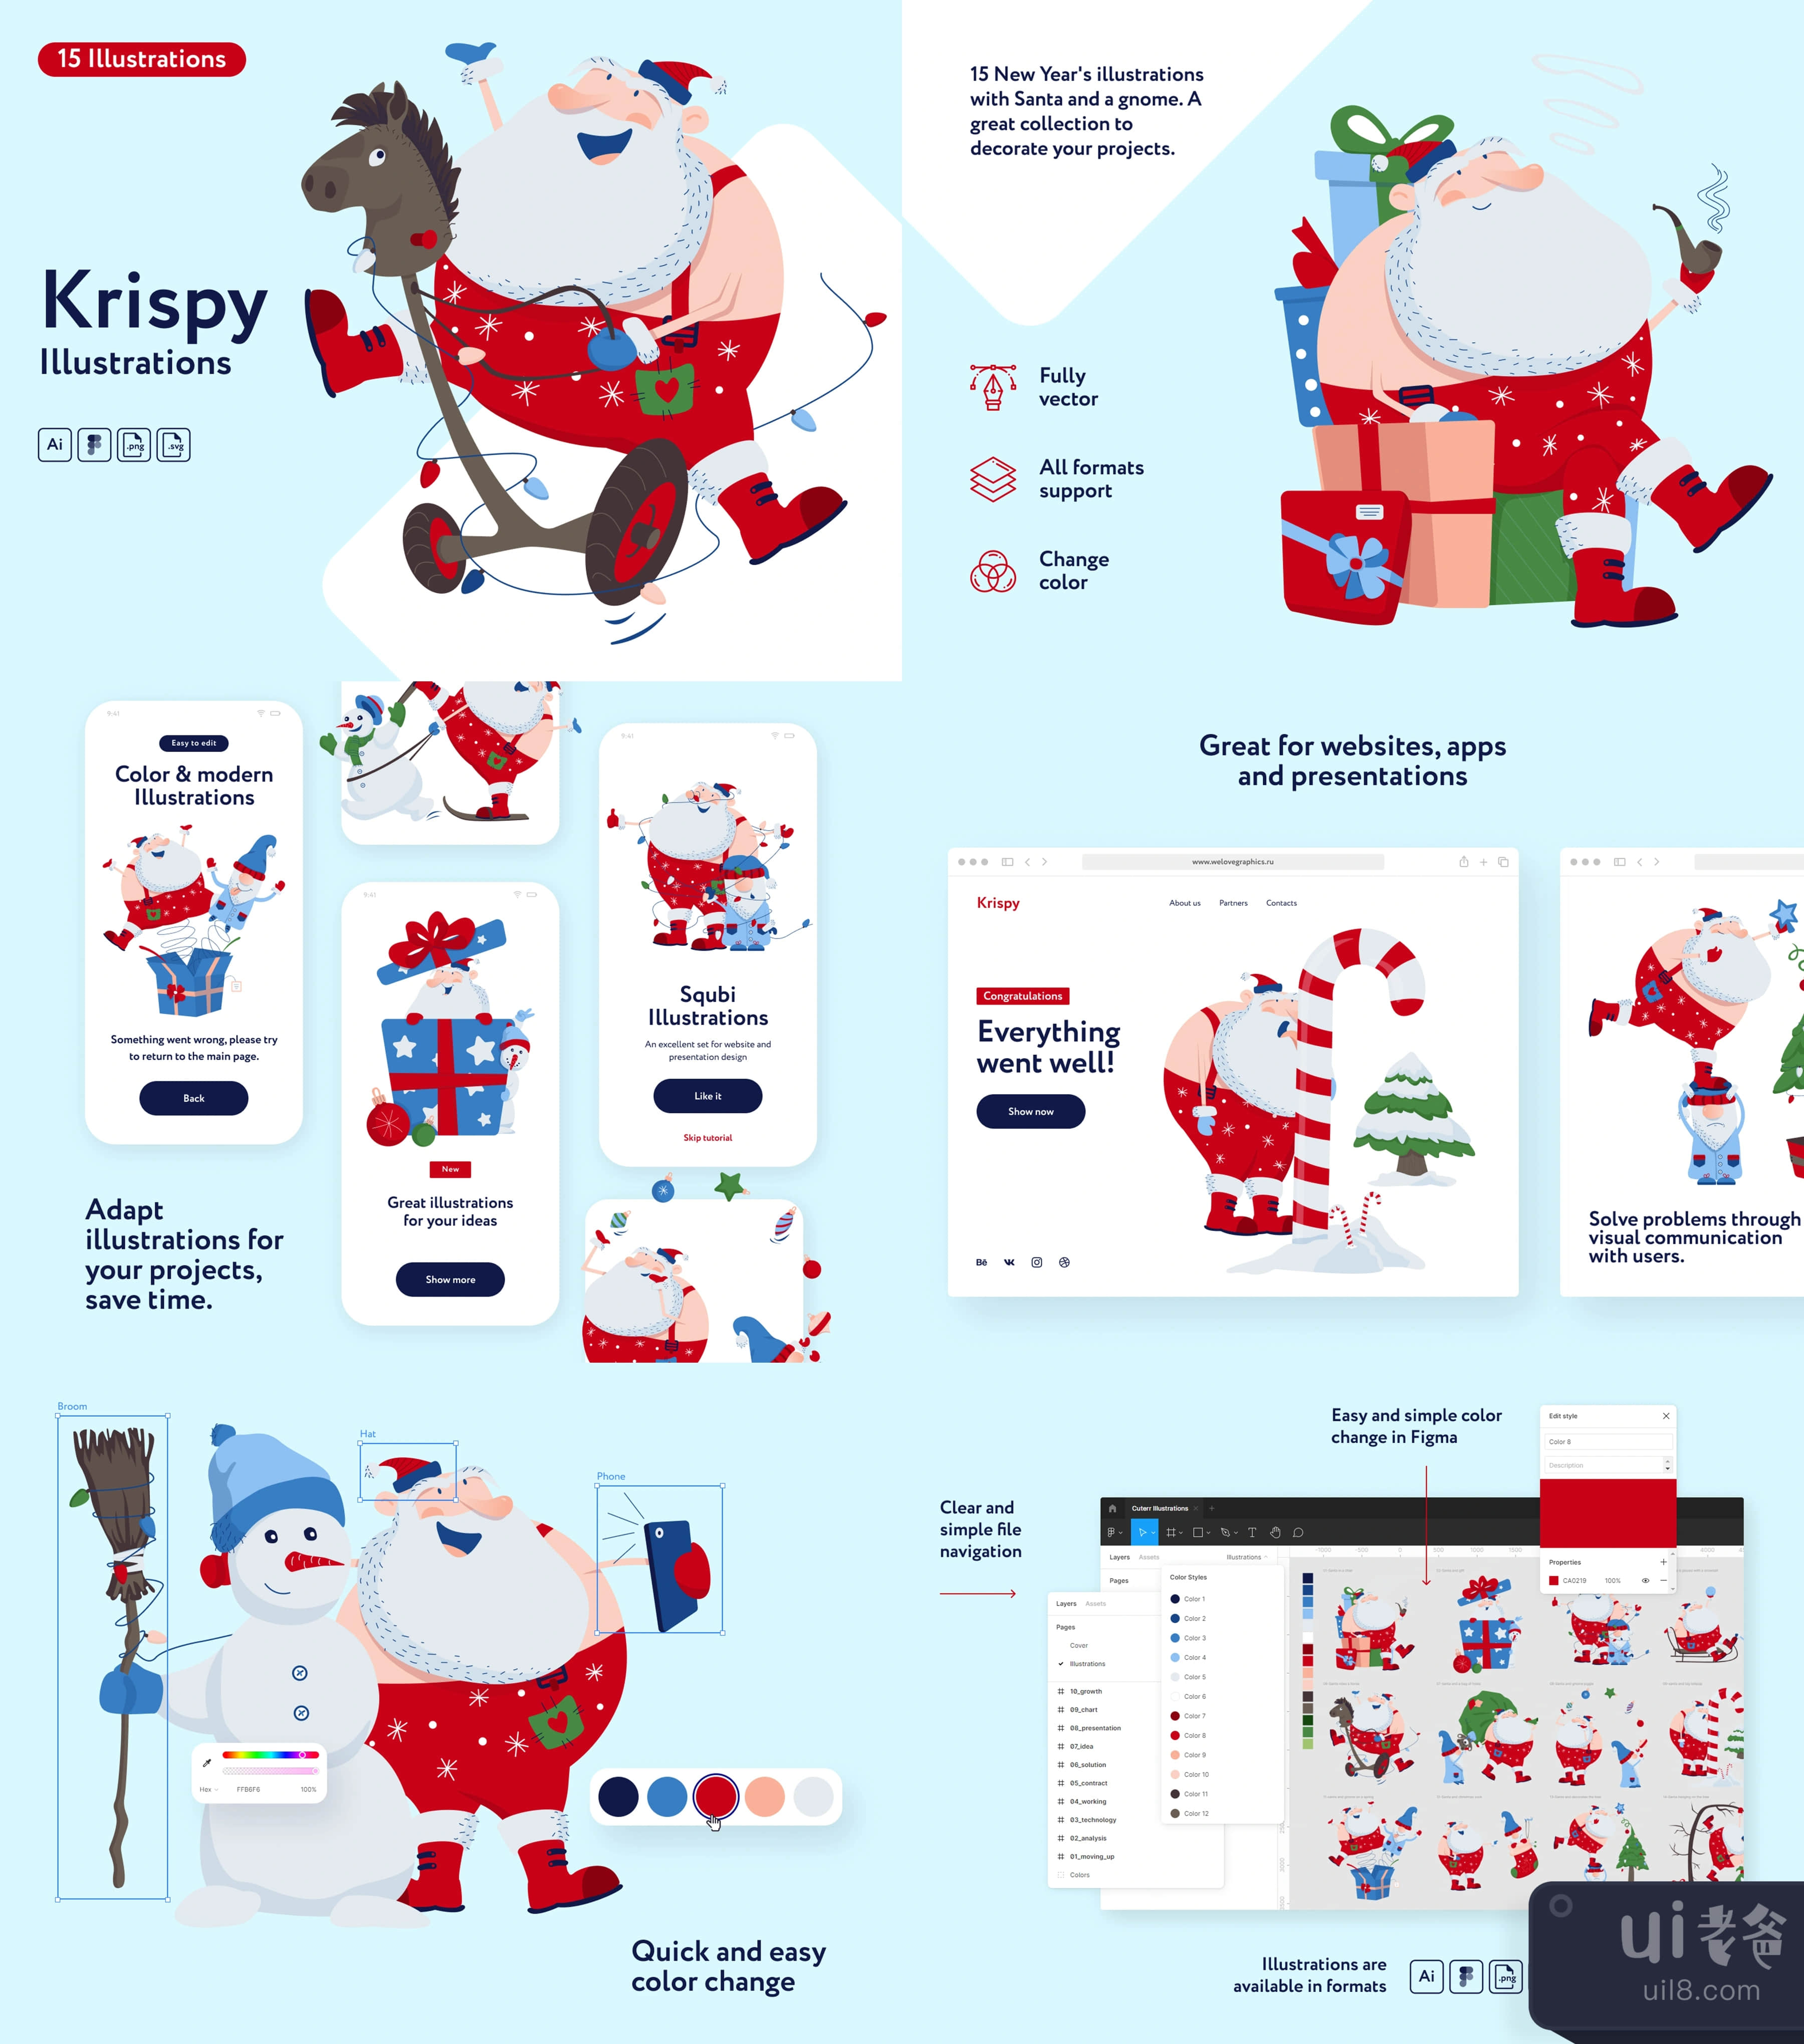 克里斯比的插图 (Krispy Illustrations)插图1